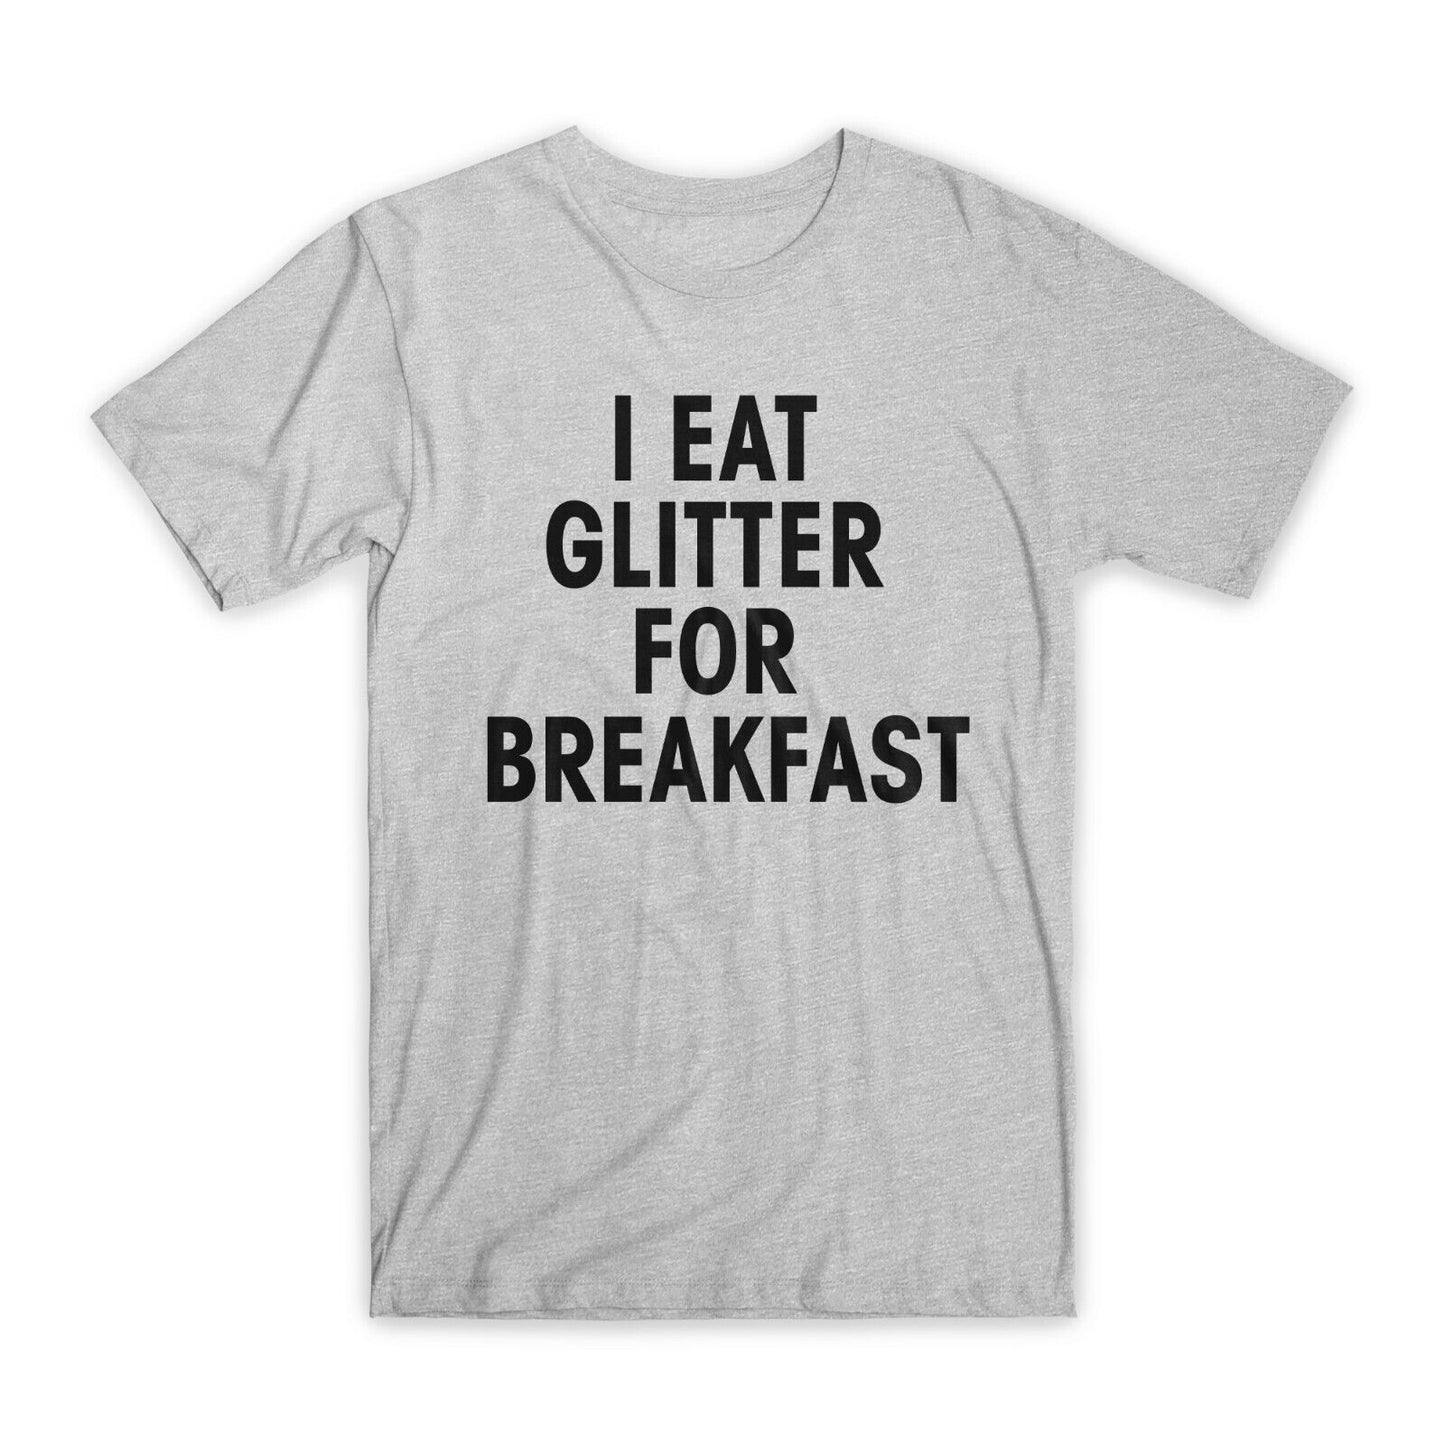 I Eat Glitter for Breakfast T-Shirt Premium Cotton Crew Neck Funny Tees Gift NEW